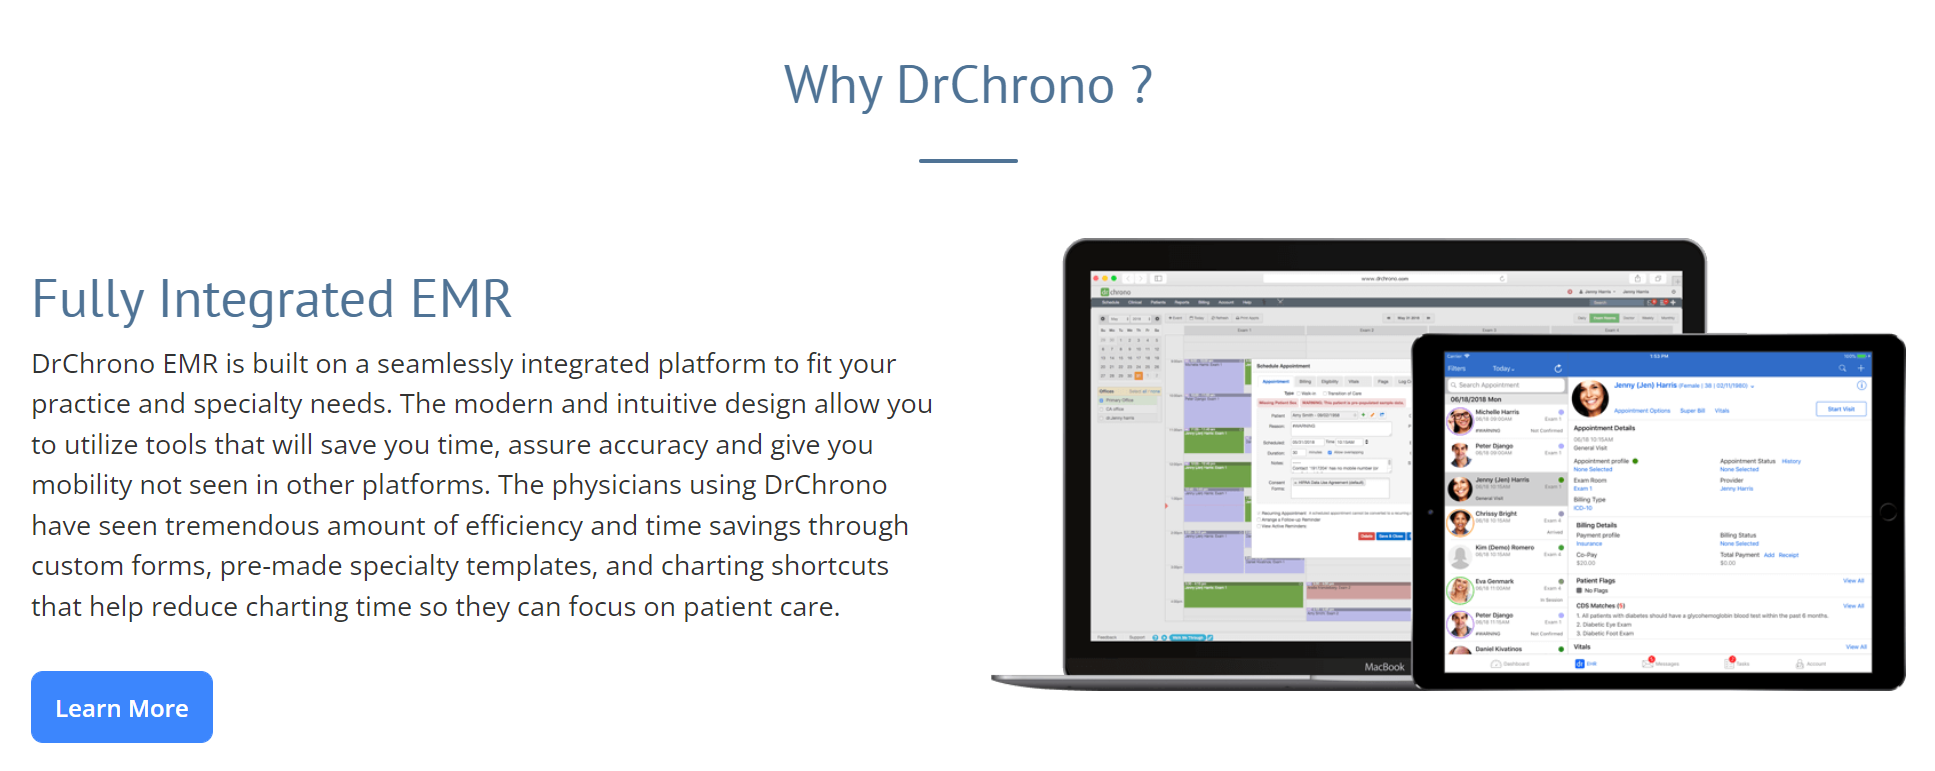 DrChrono product / service